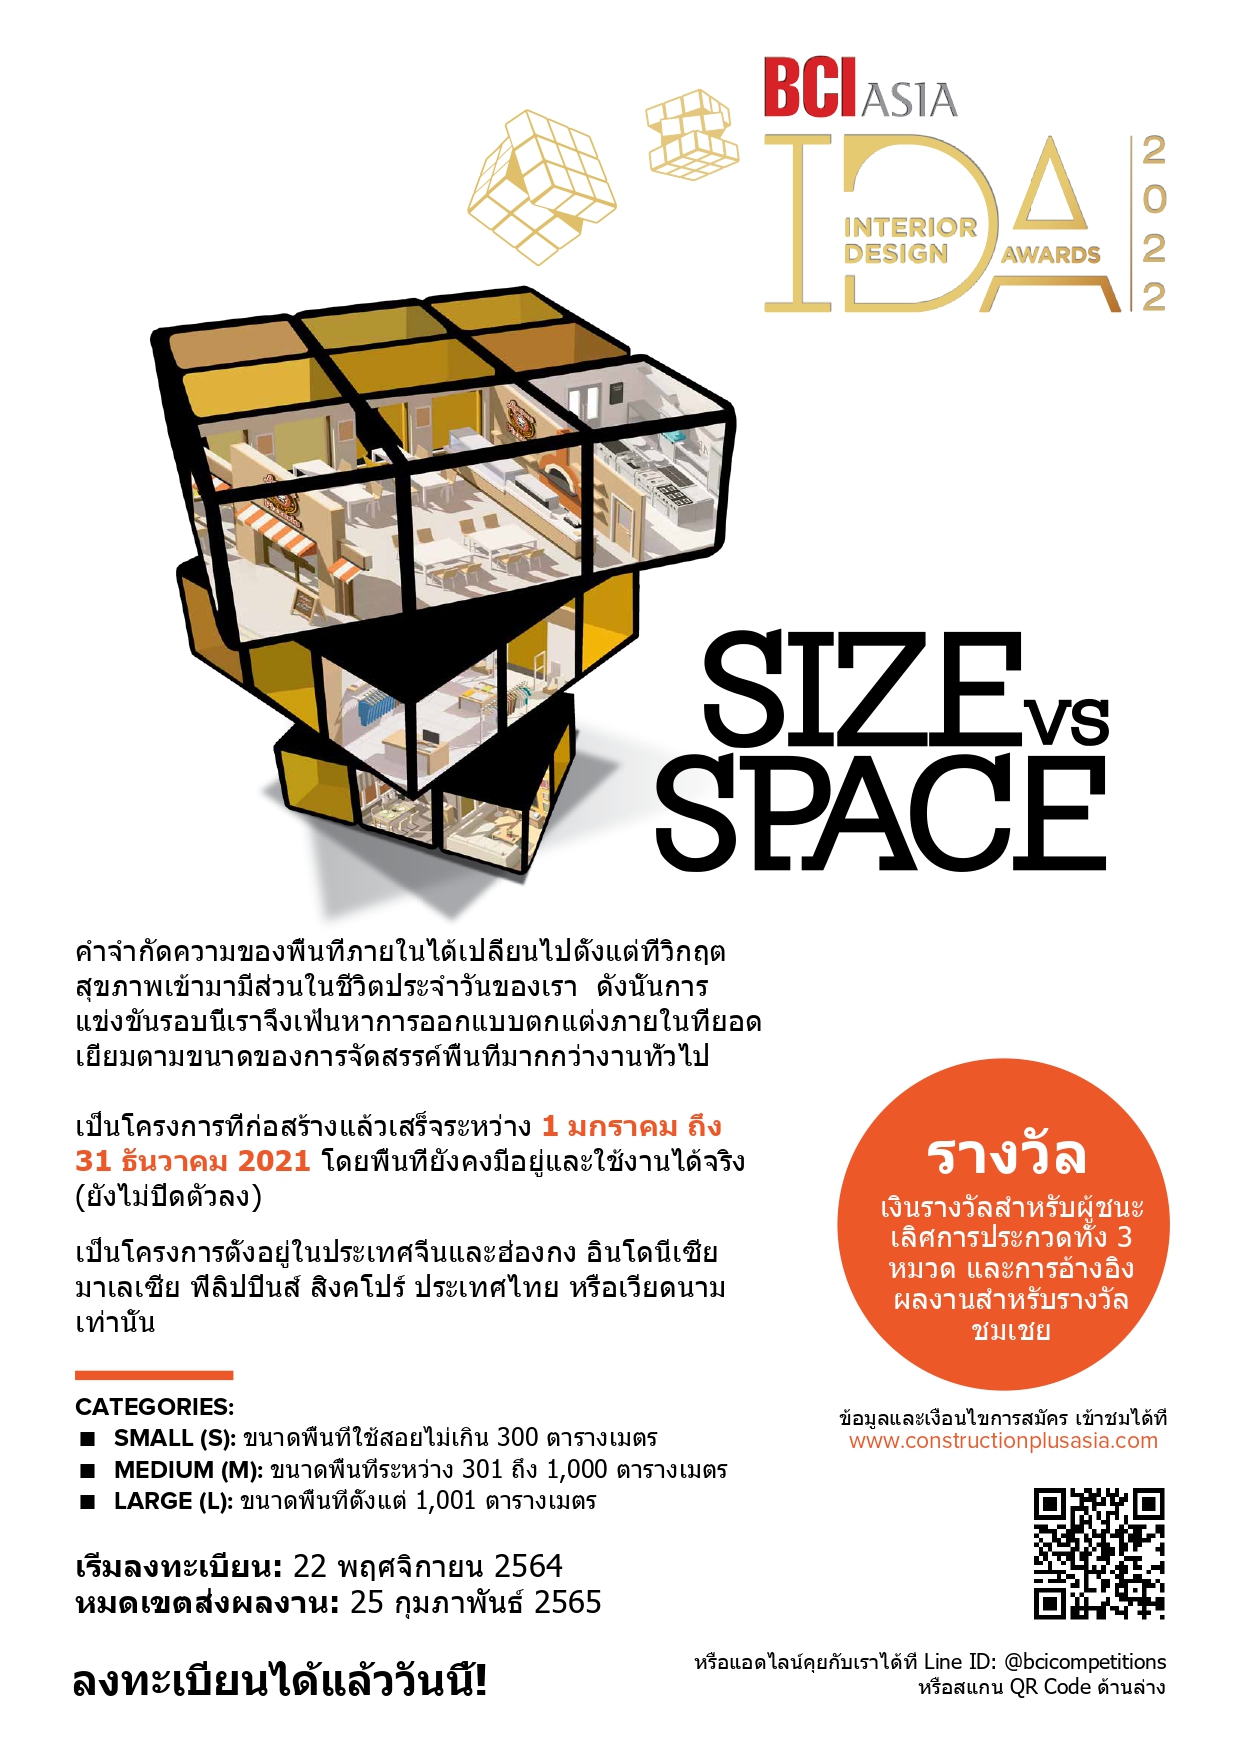 BCI Asia Interior Design Awards (IDA) 2022 